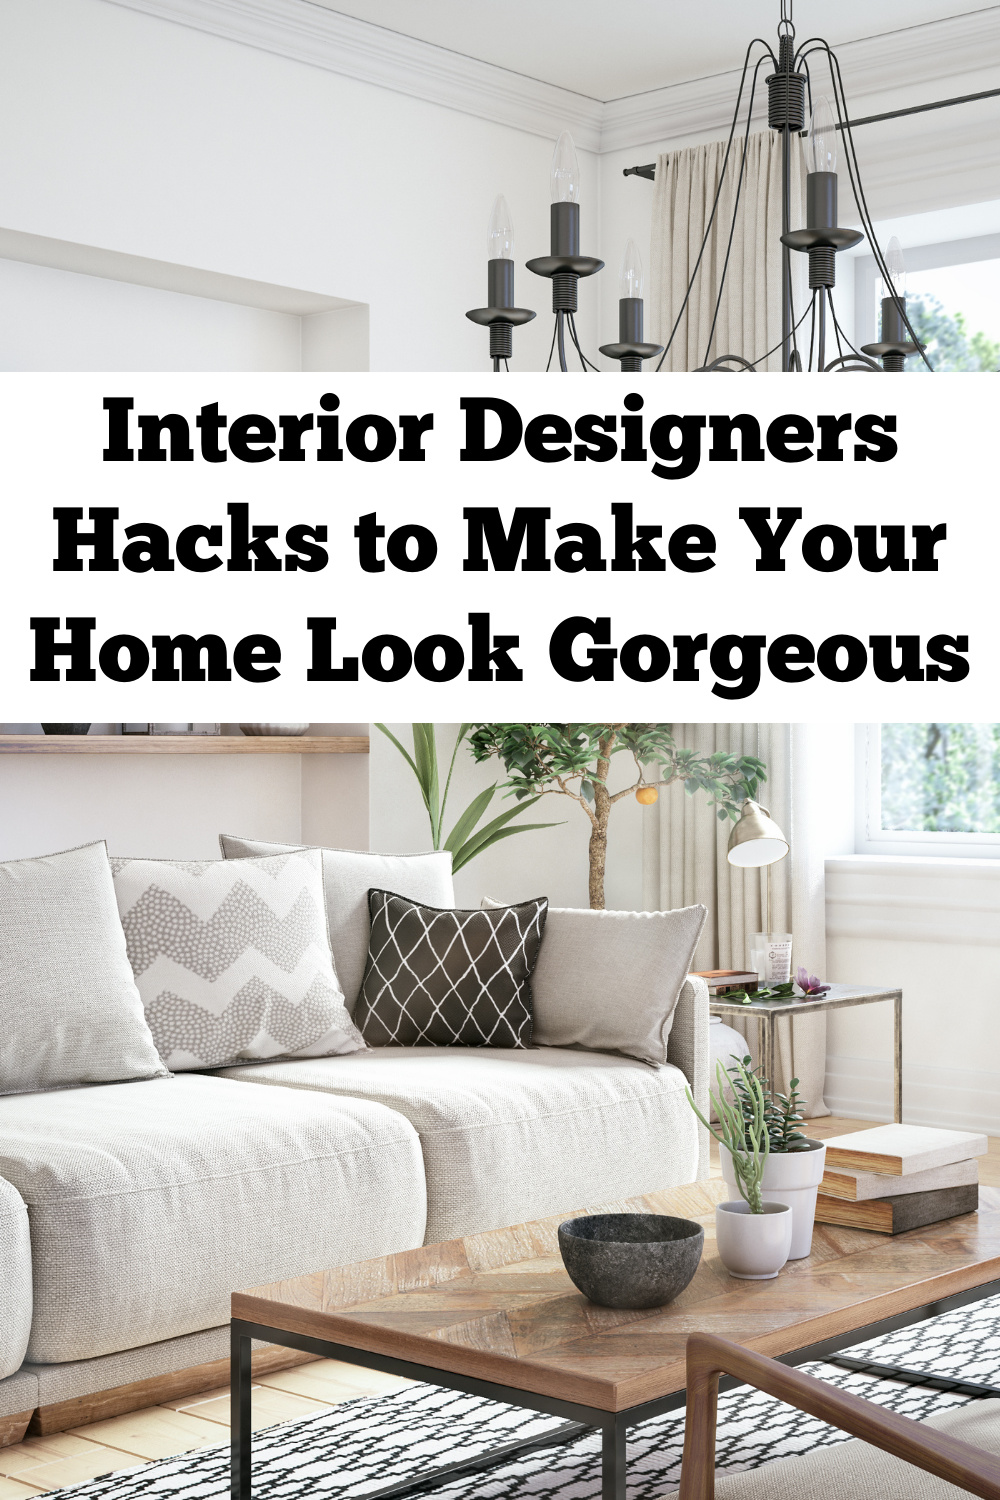 Interior Designers Hacks to Make Your Home Look Gorgeous - ConservaMom